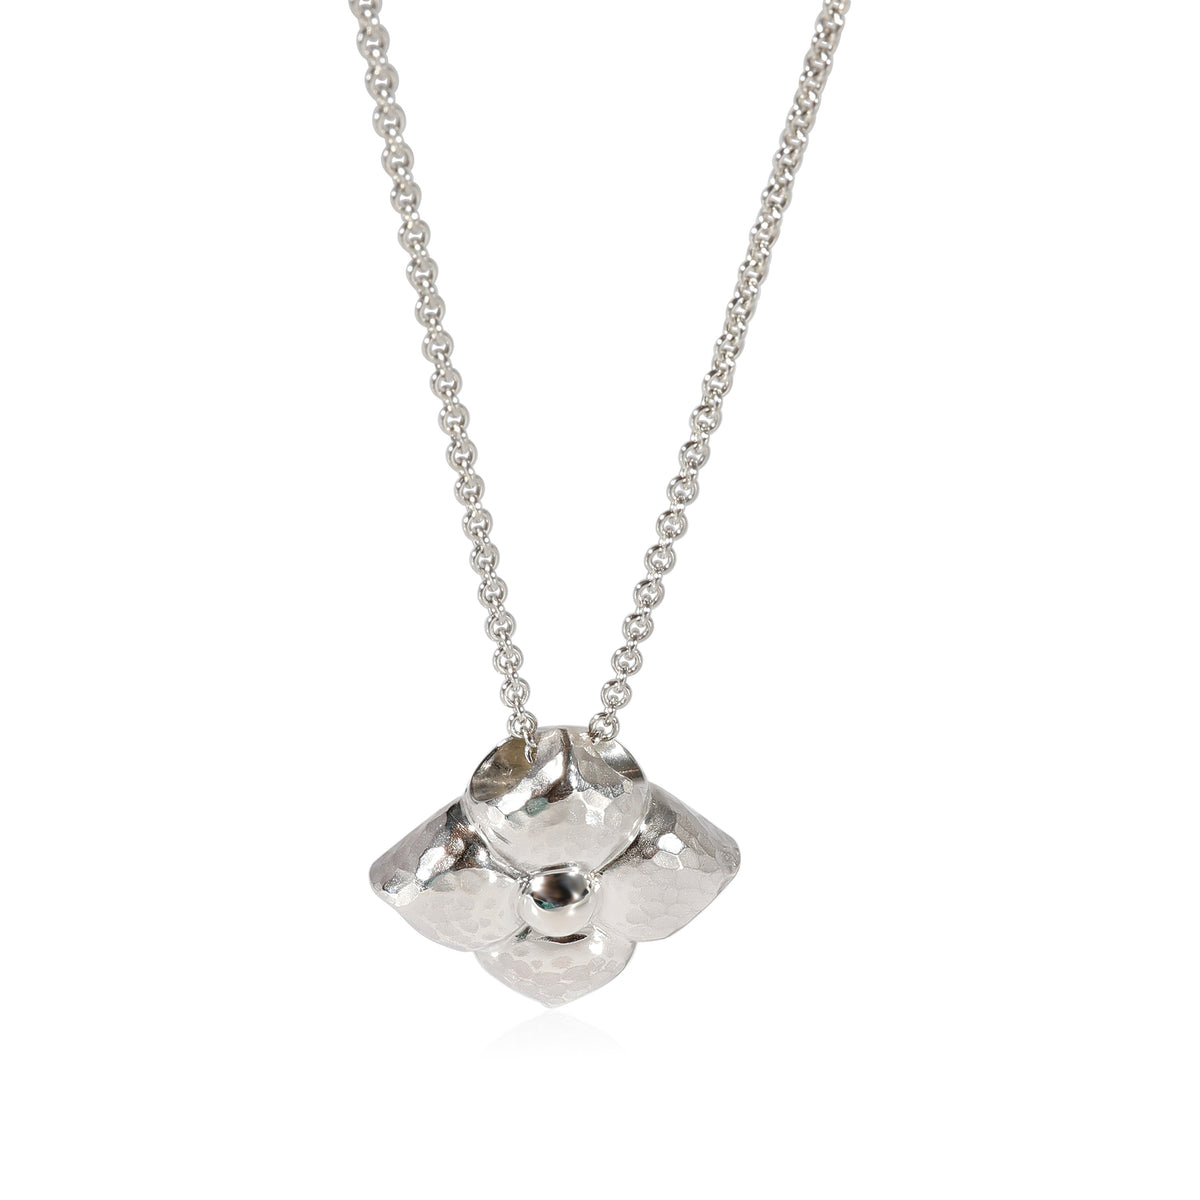 Tiffany & Co. Paloma Picasso Fiore Pendant in Sterling Silver on a Chain